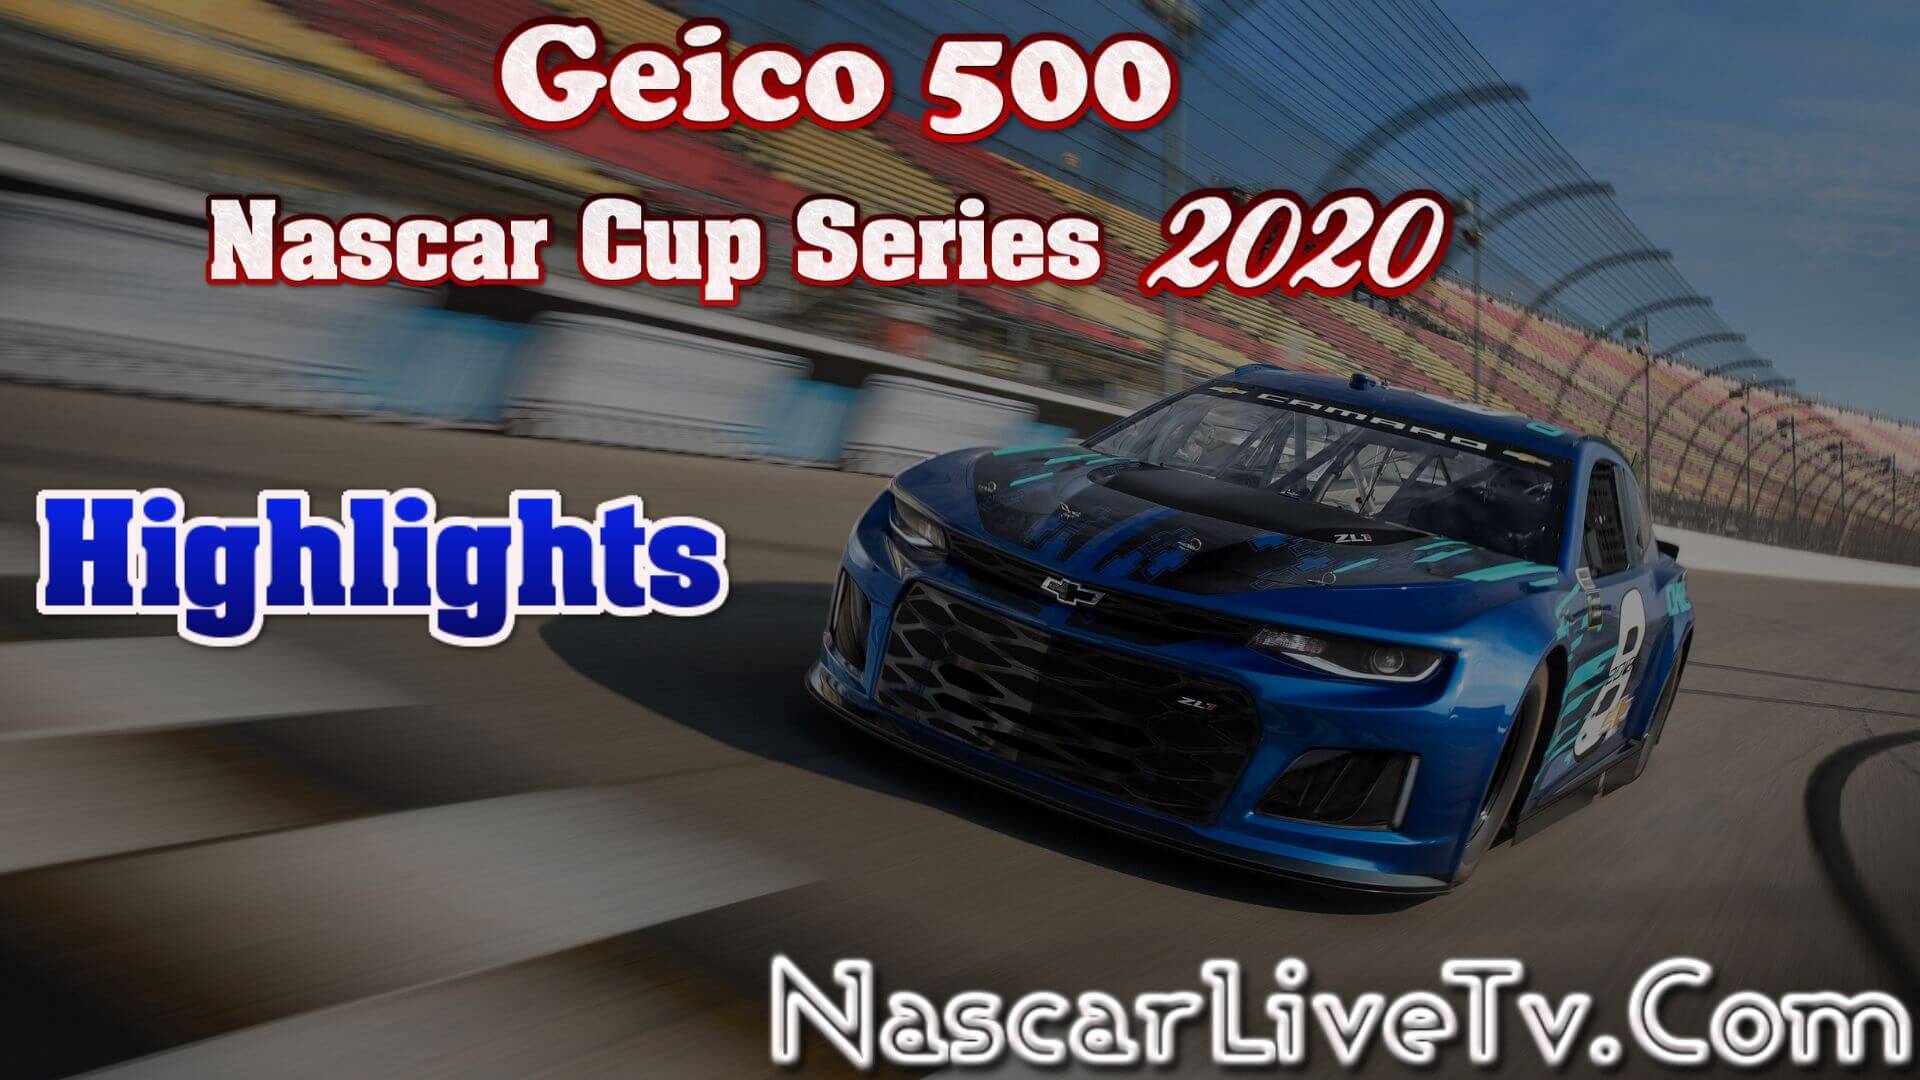 Geico 500 Nascar Cup Series 2020 Highlights